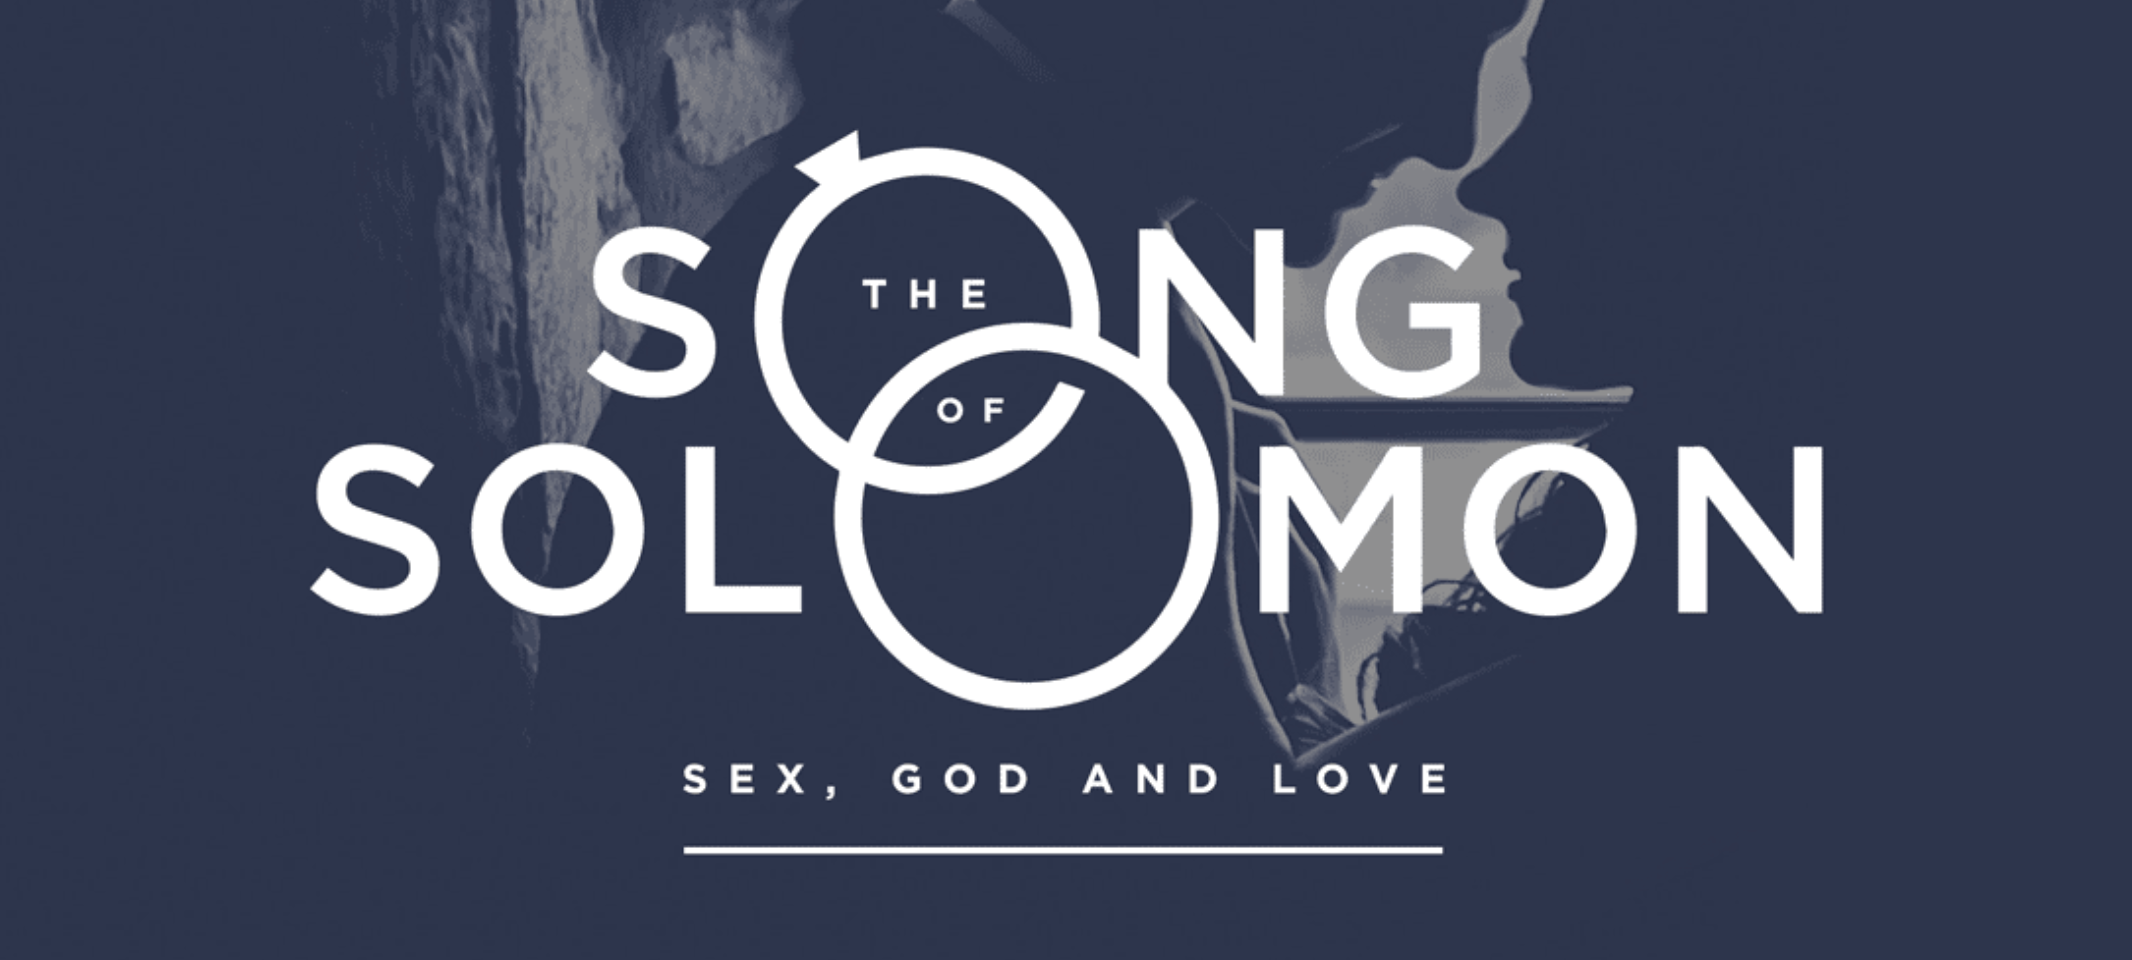 Song of Solomon Pt. 2